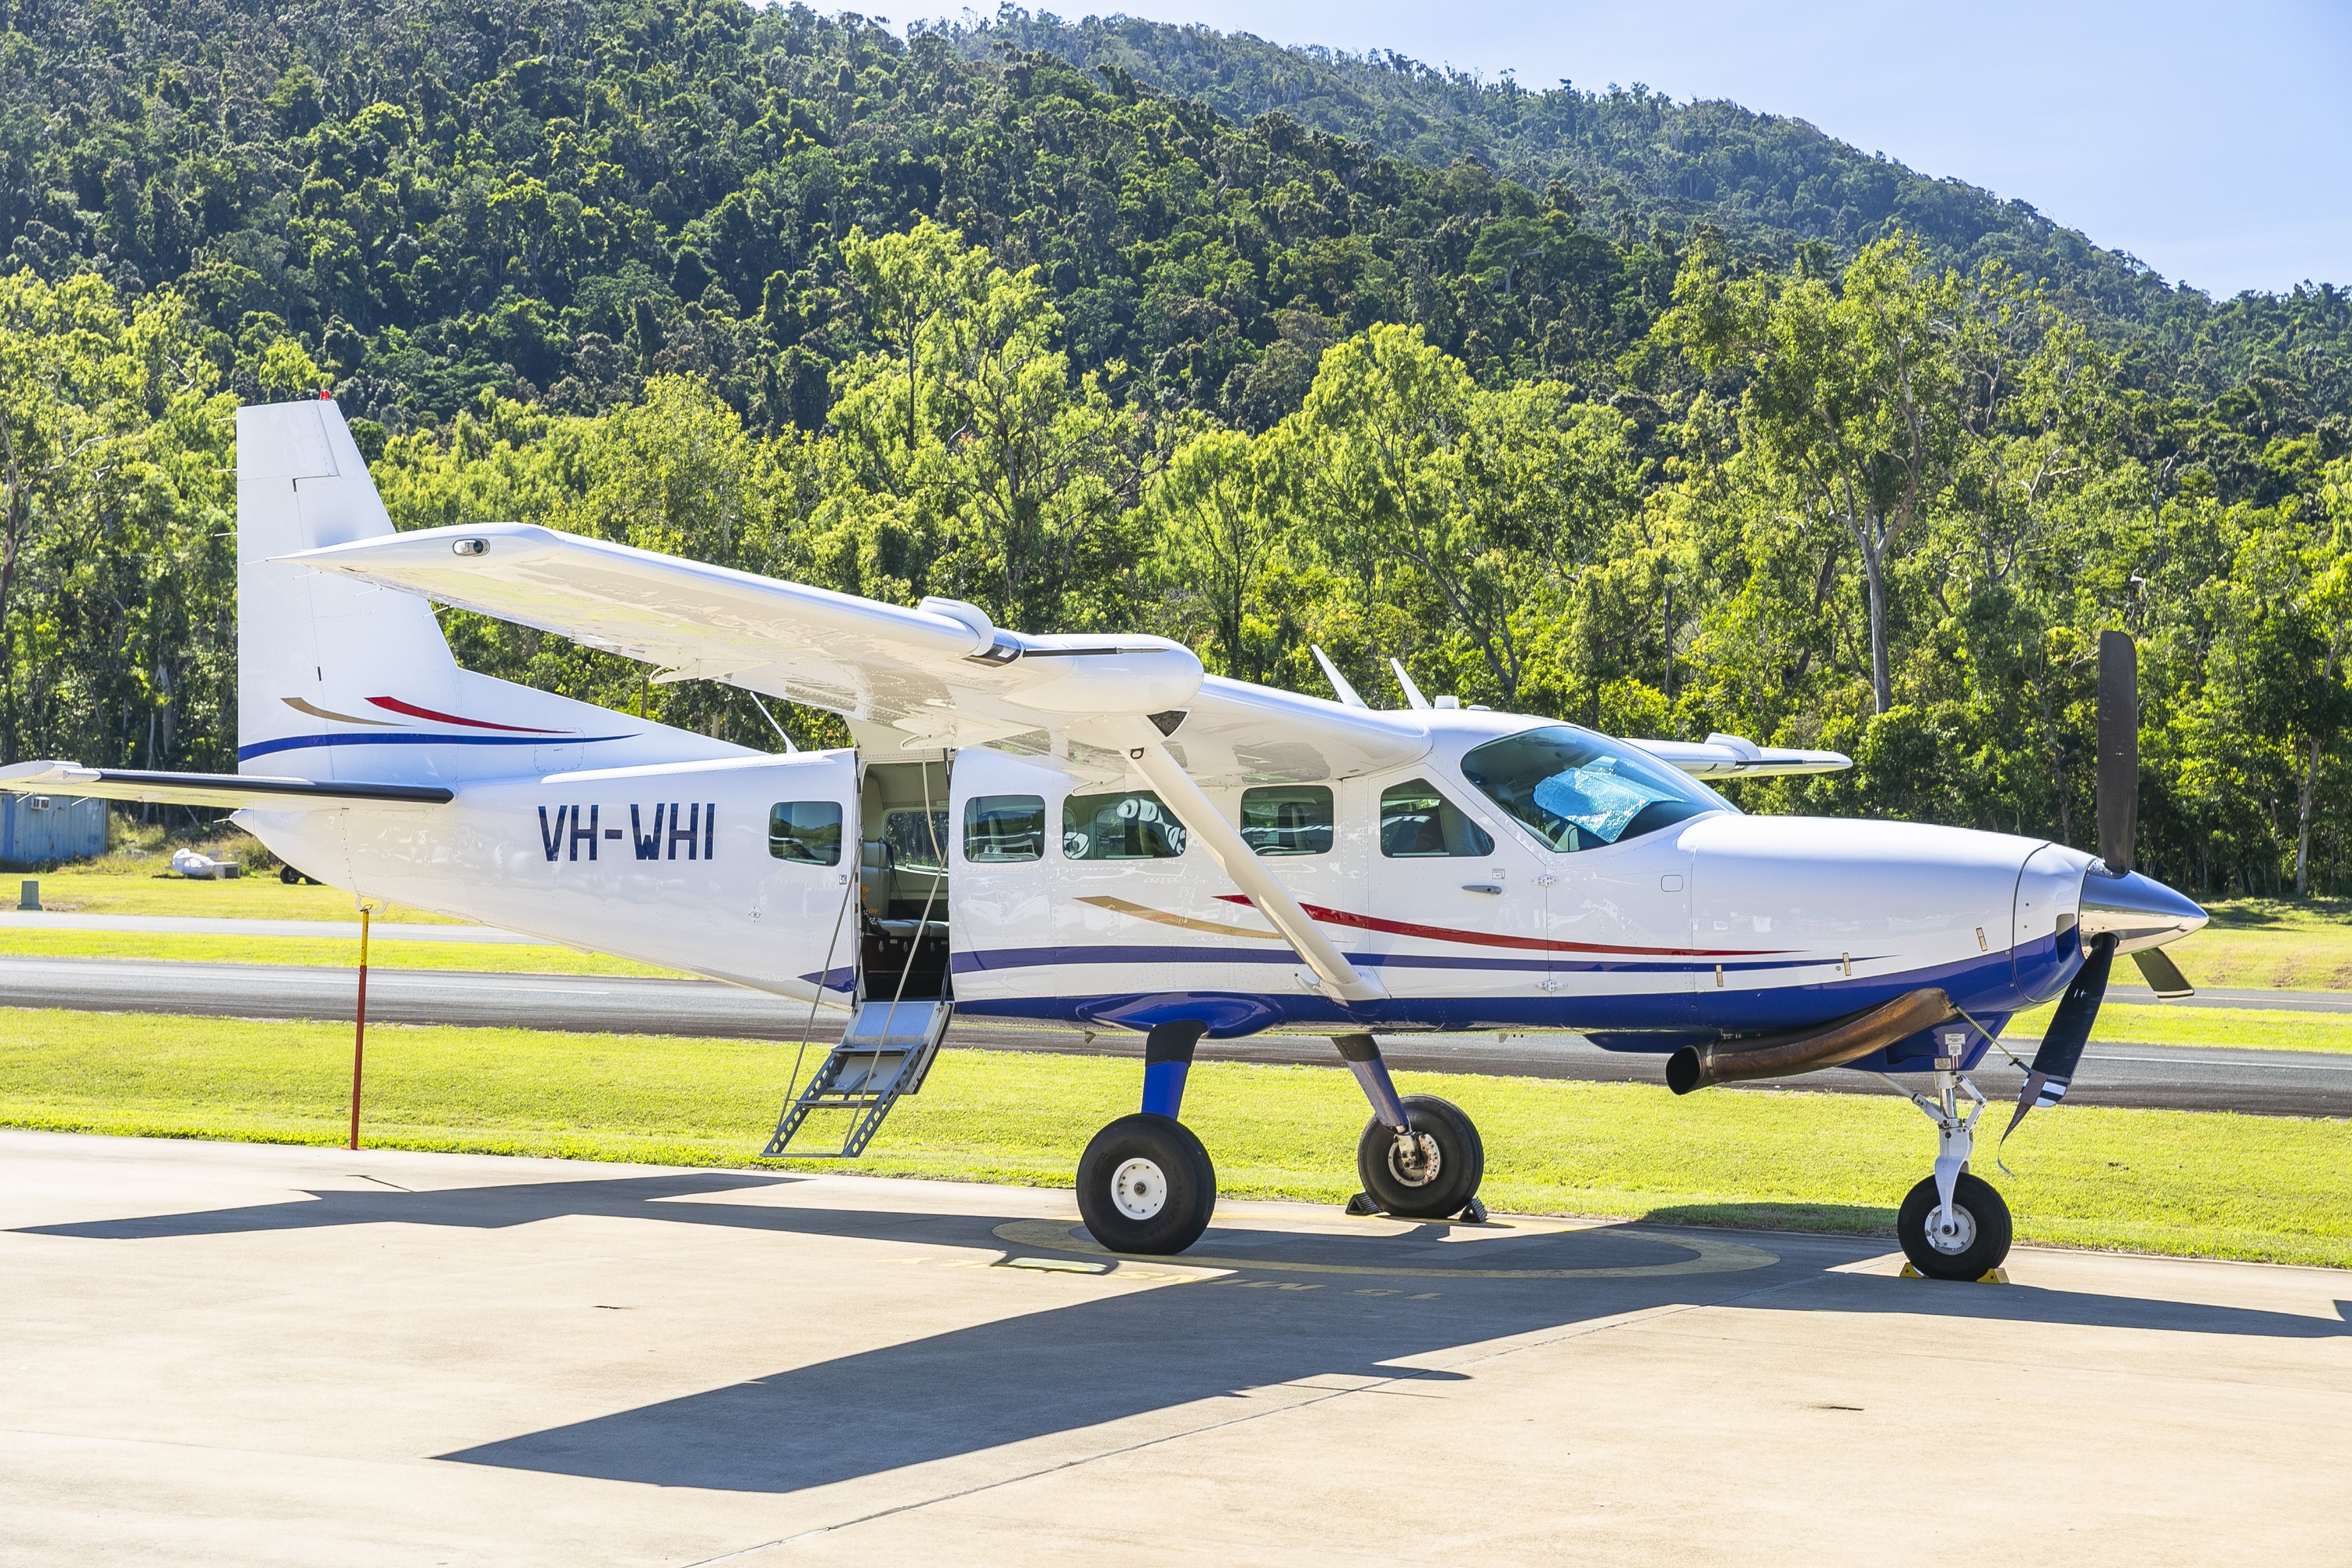 Whitsundays Scenic Flight- The plane